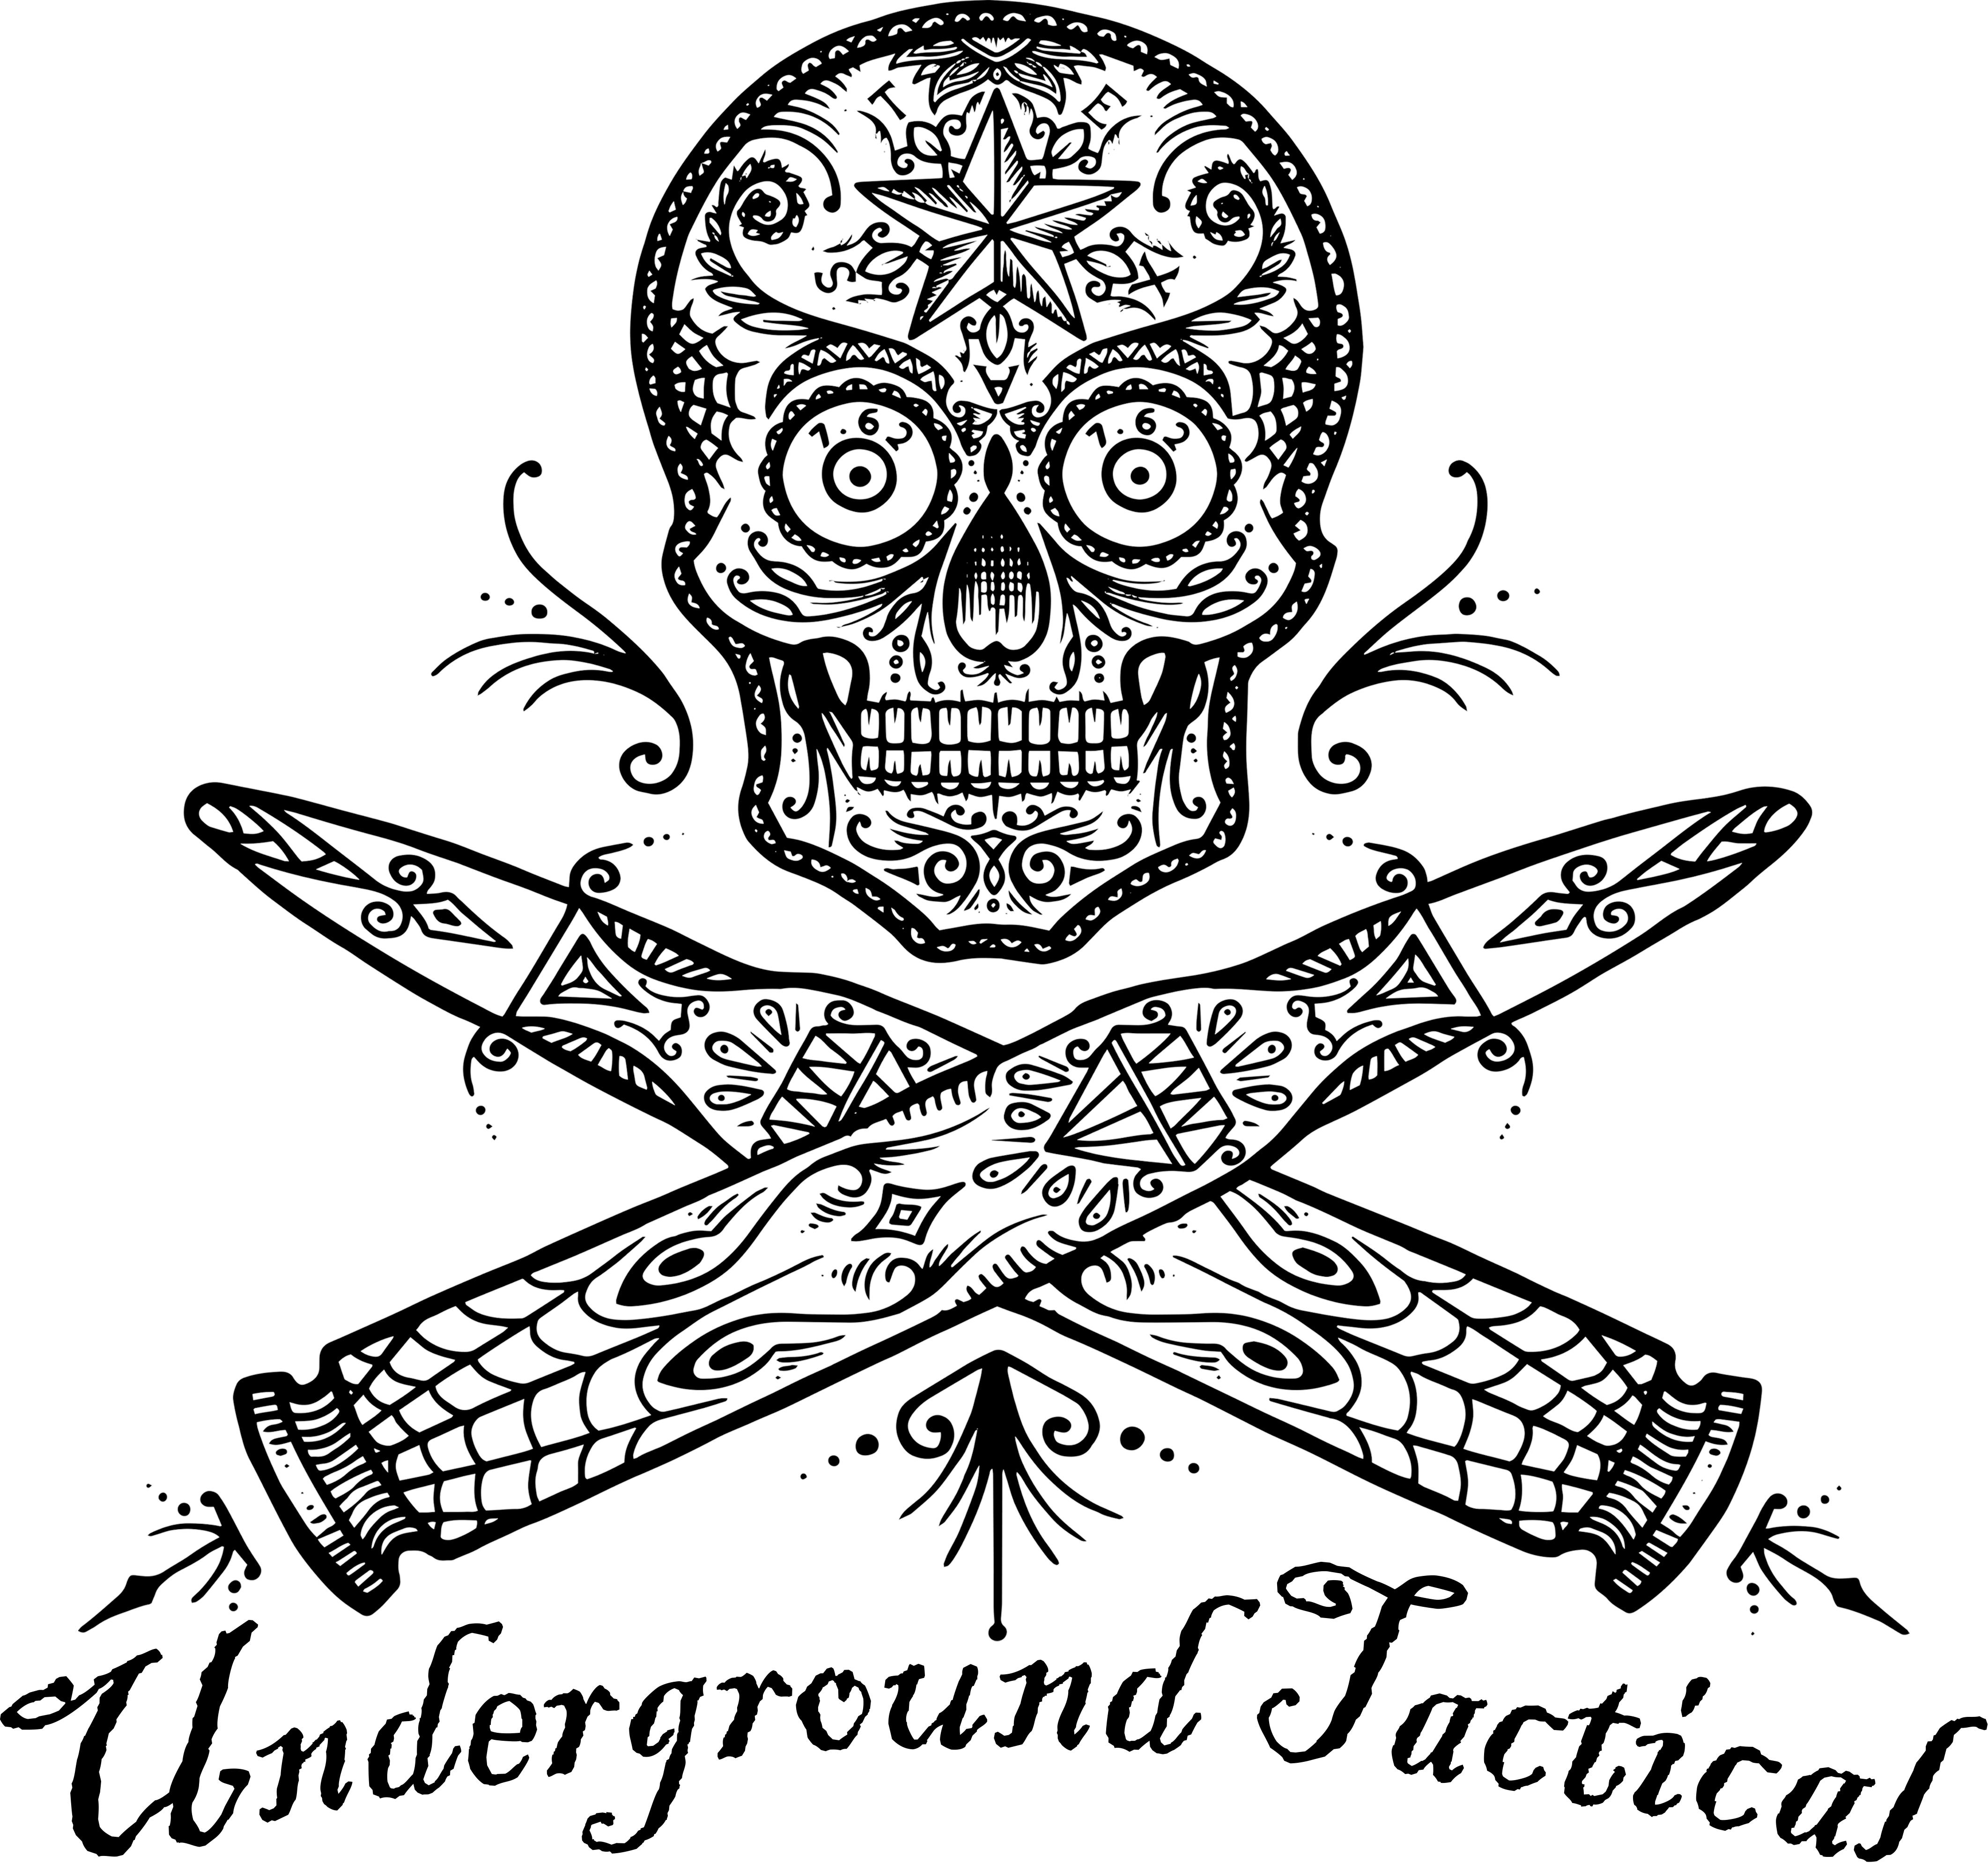 Underground Tactical